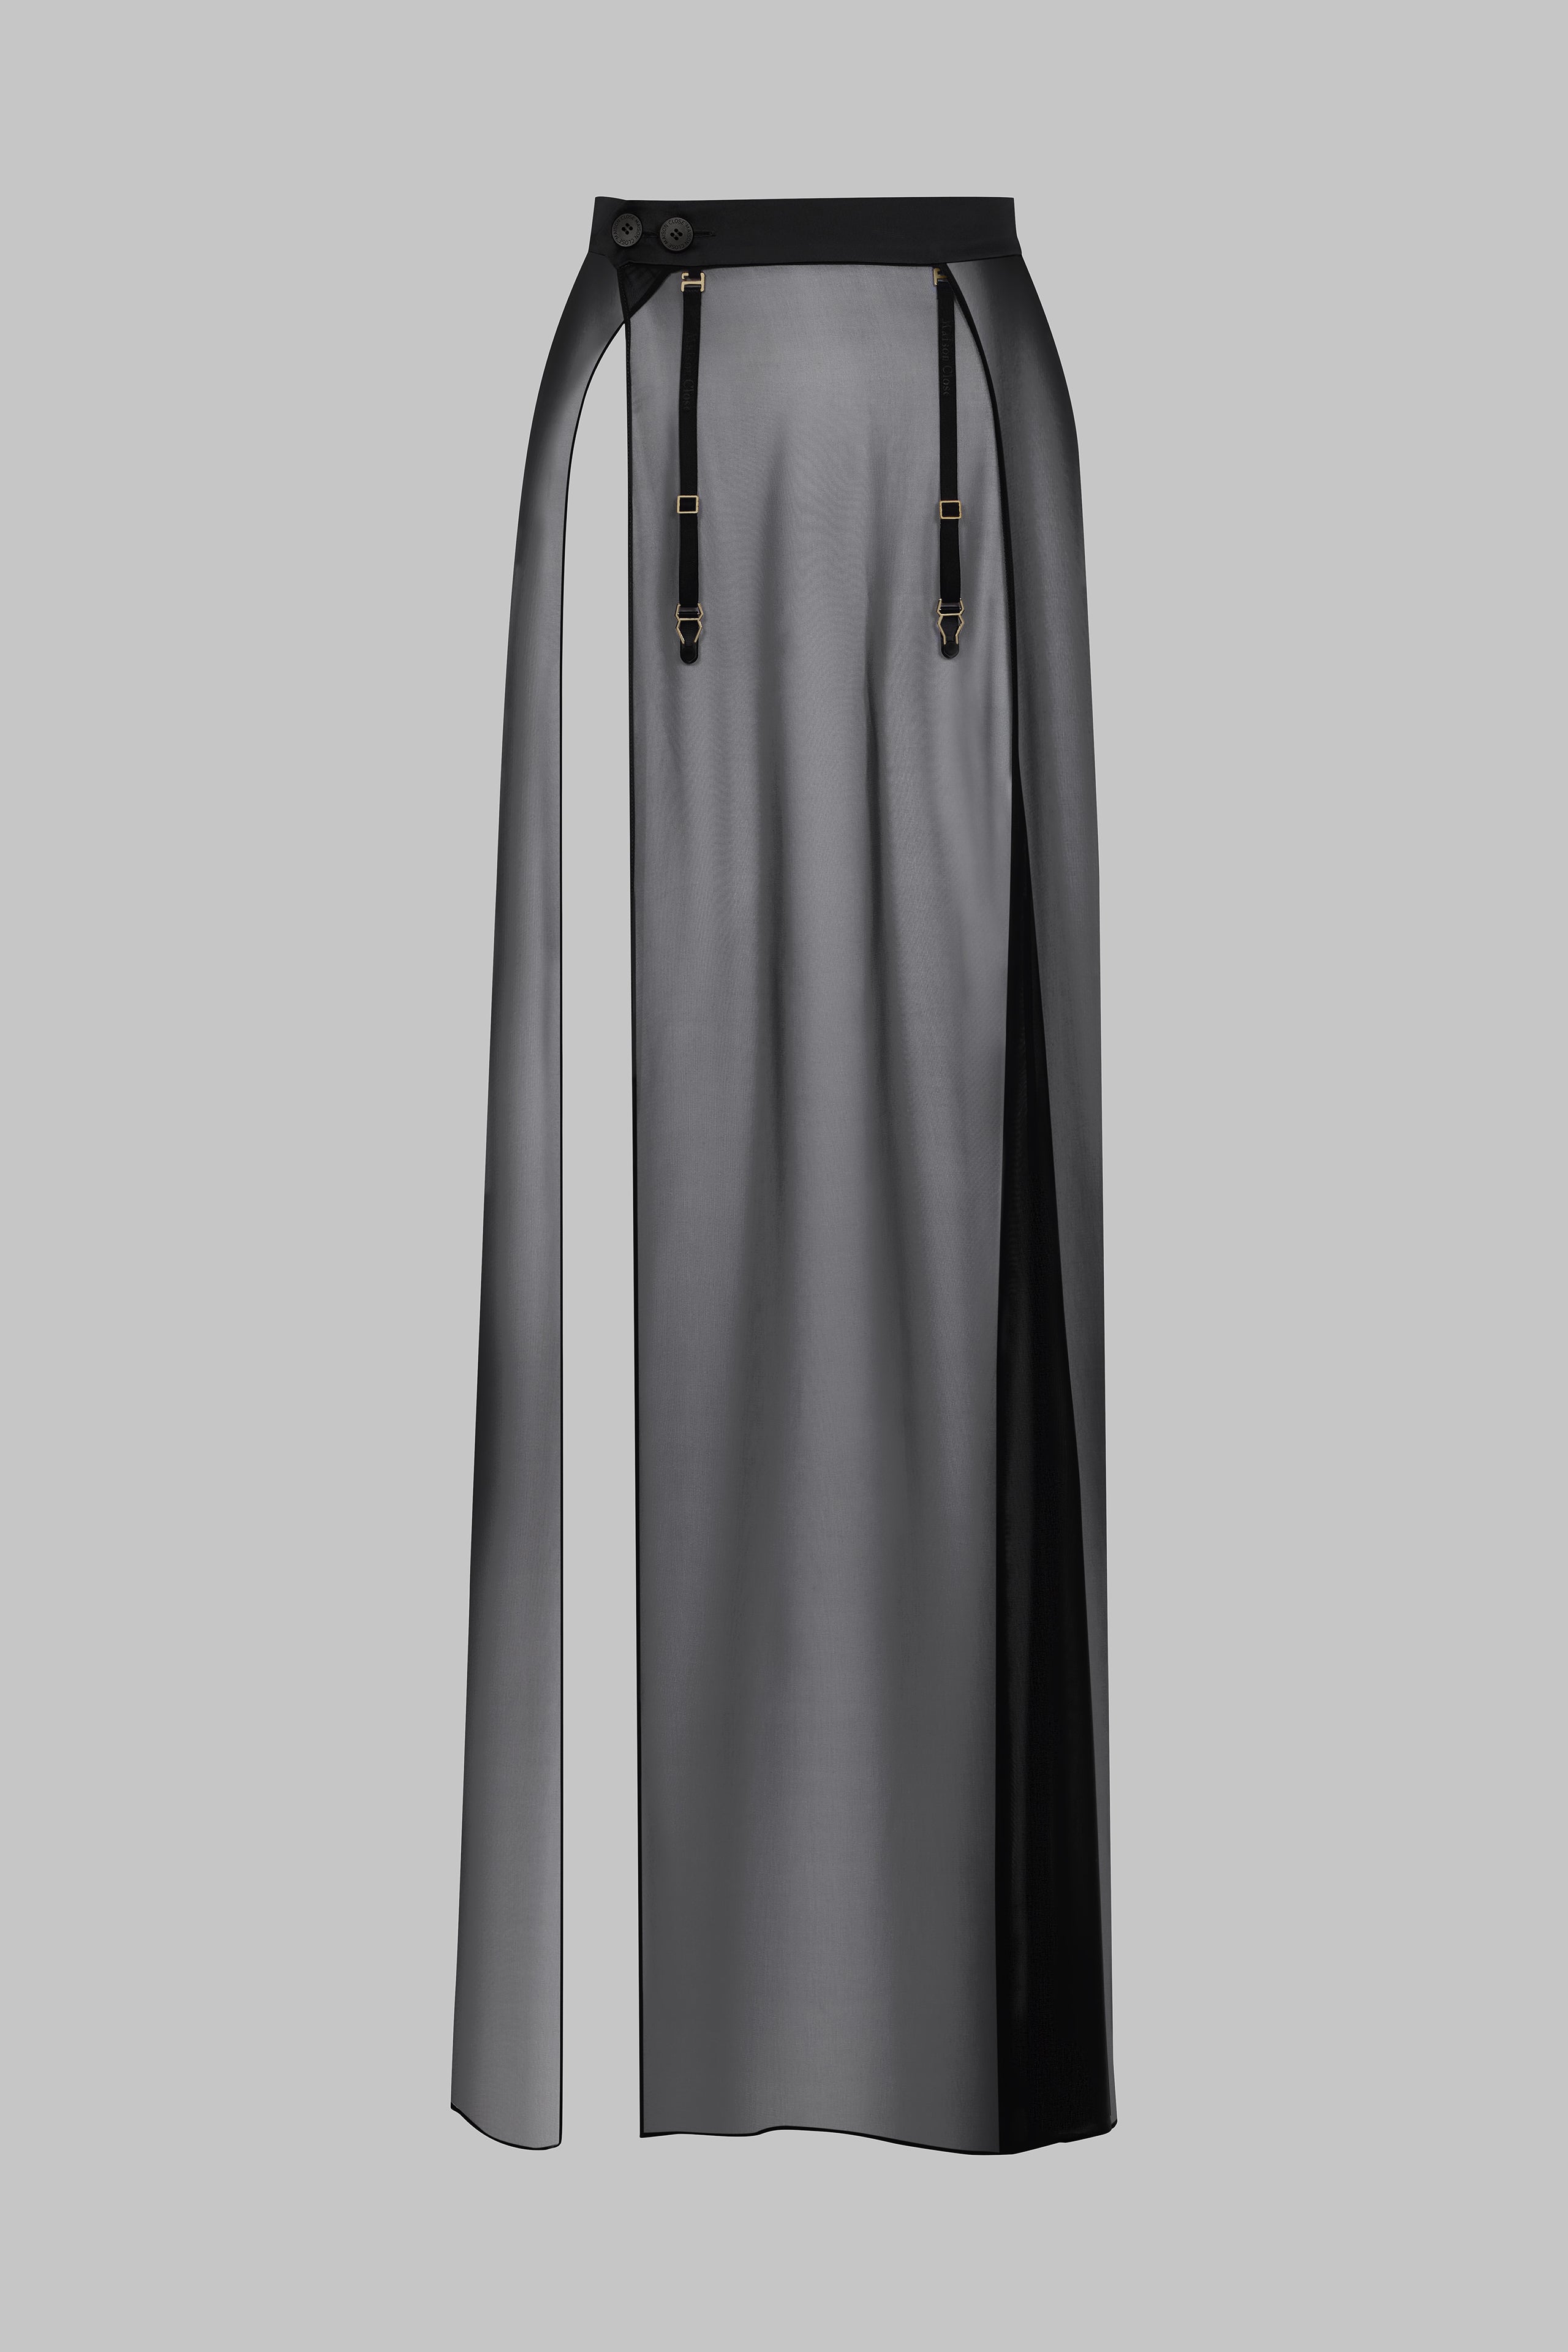 005 - Langes transparentes Wickelkleid aus Musselin